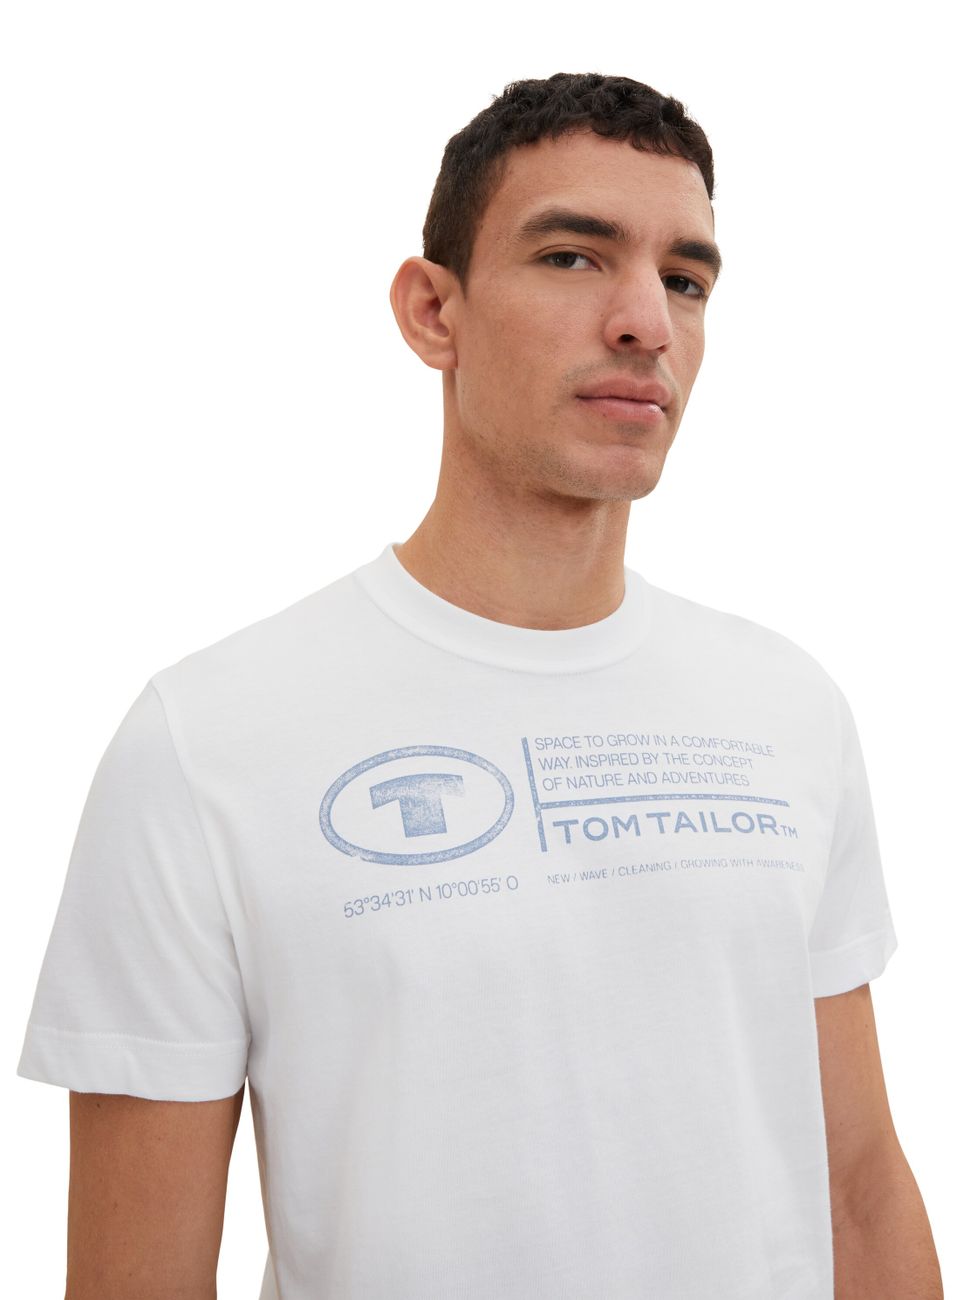 Tom Tailor Jerren T-Shirt mit Print